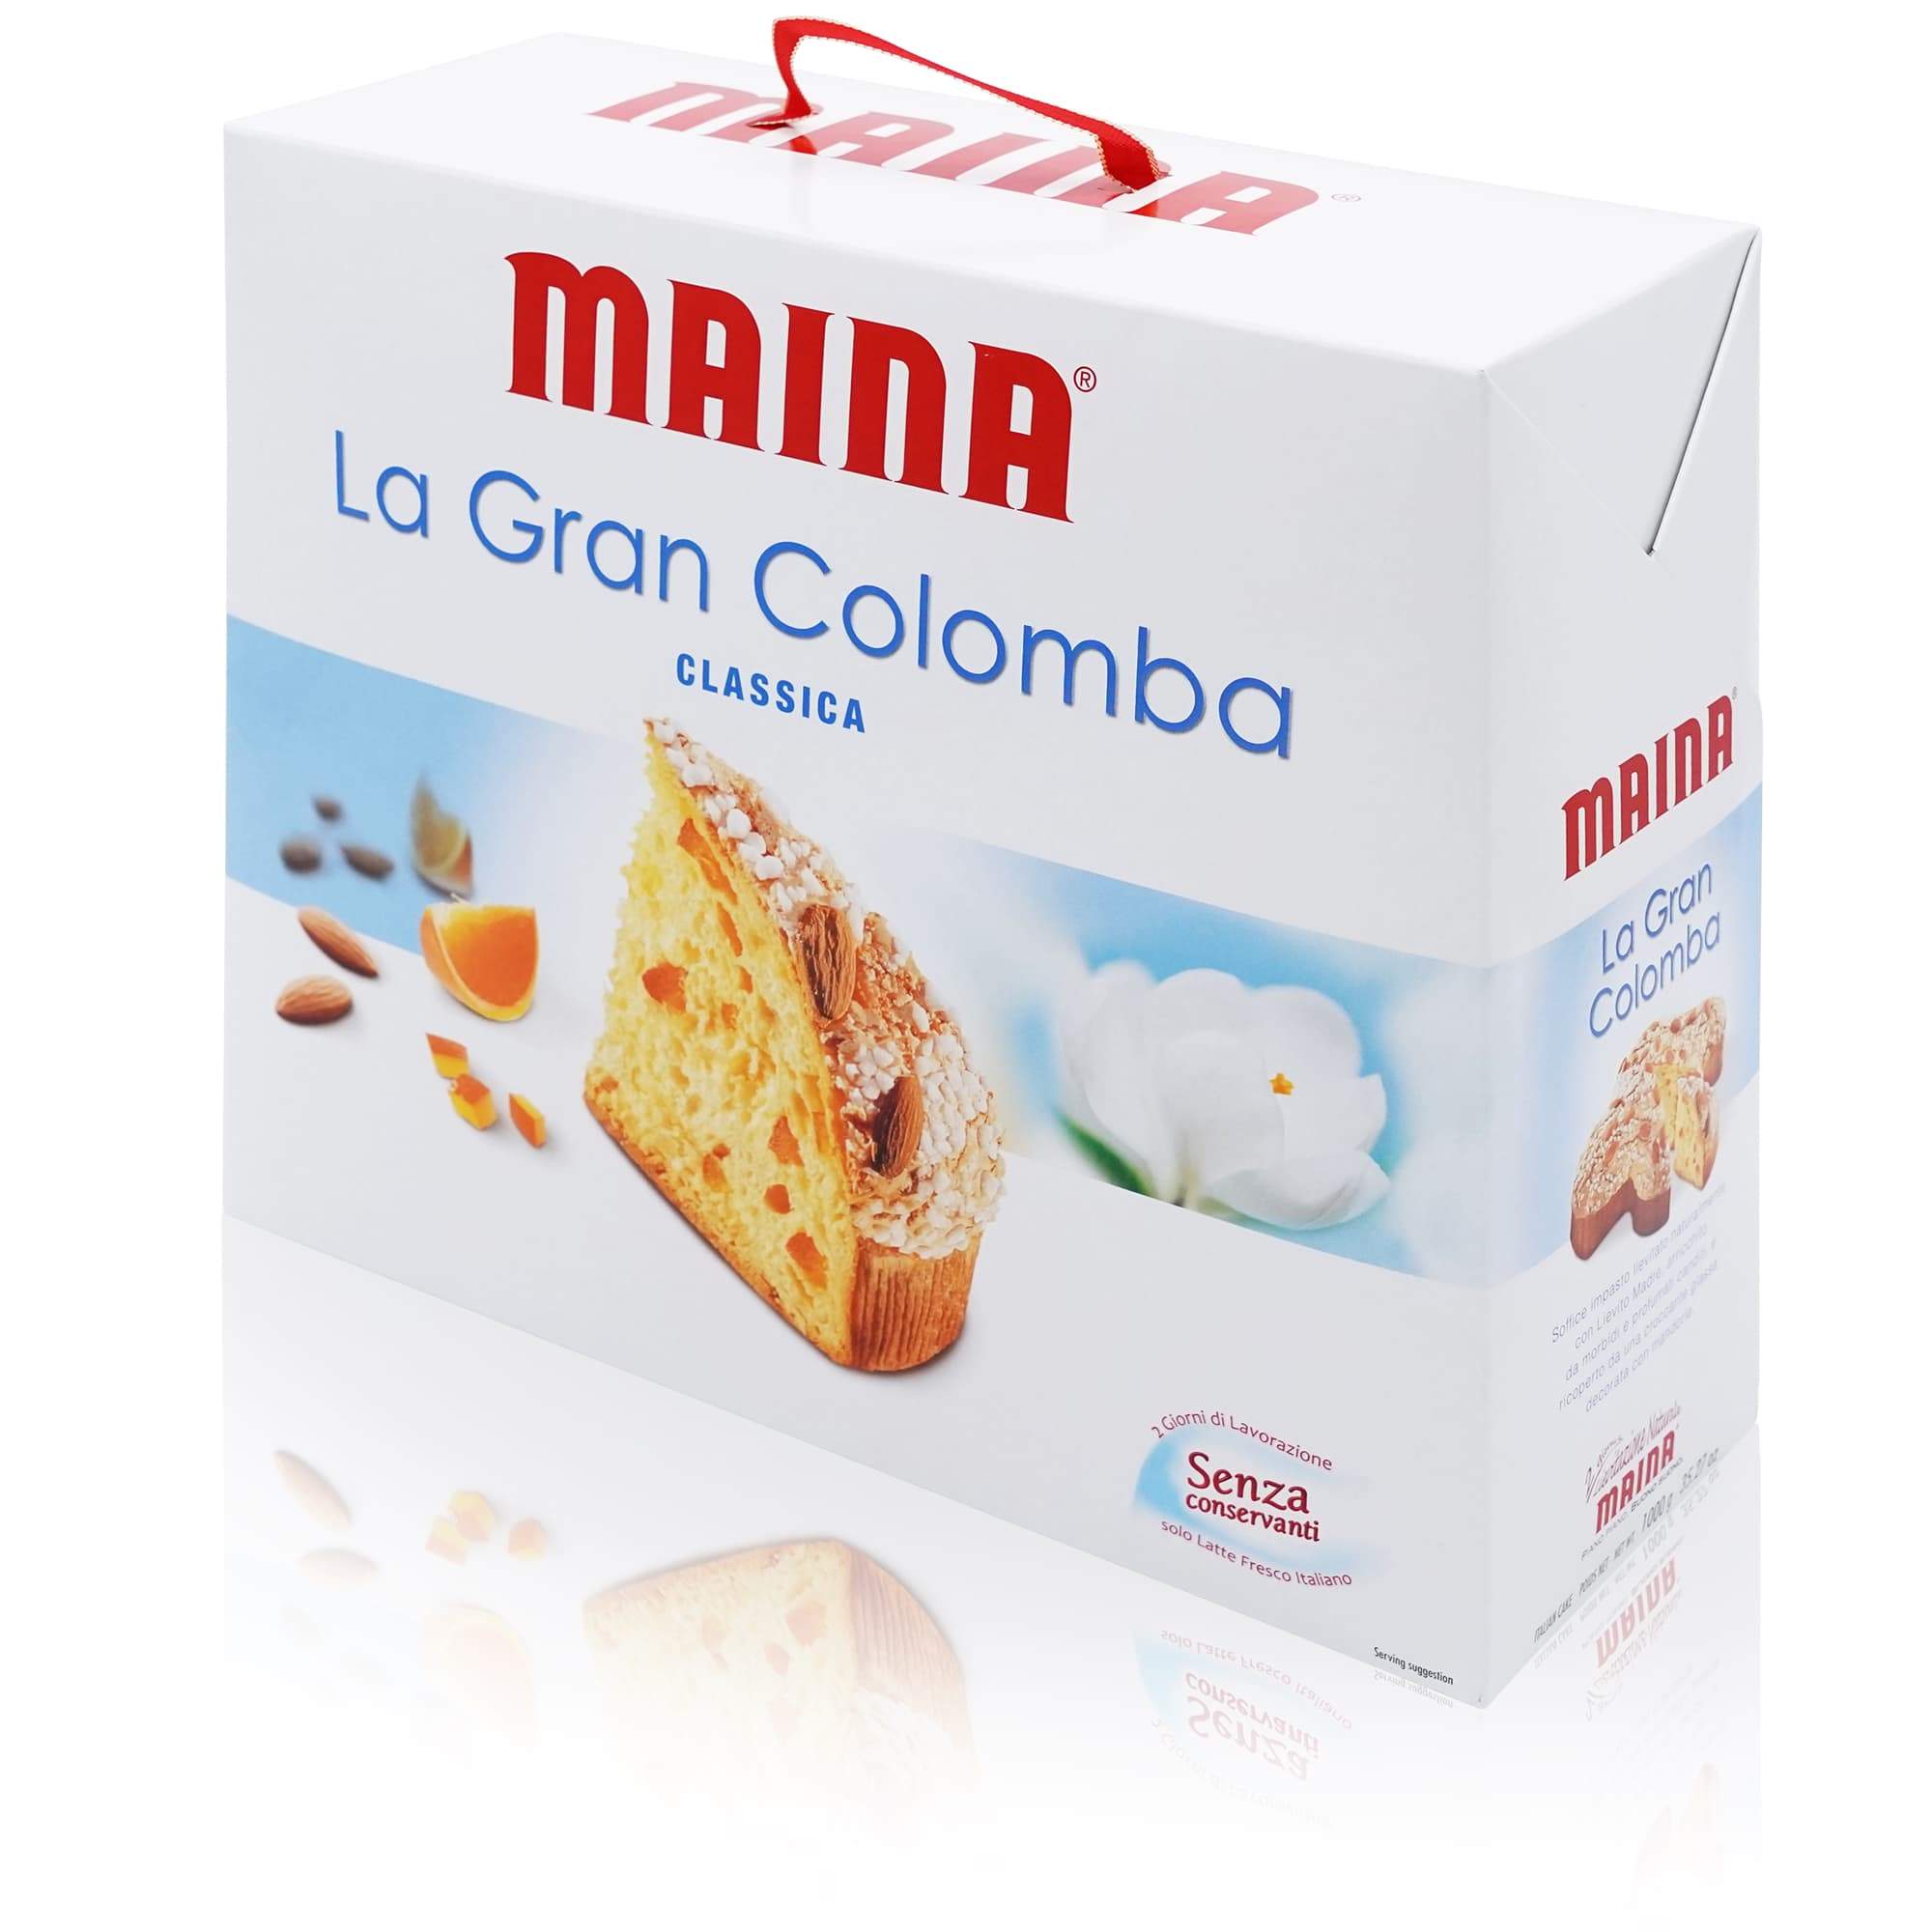 MAINA Colomba Gran Colomba – Osterkuchen Taube - 1kg